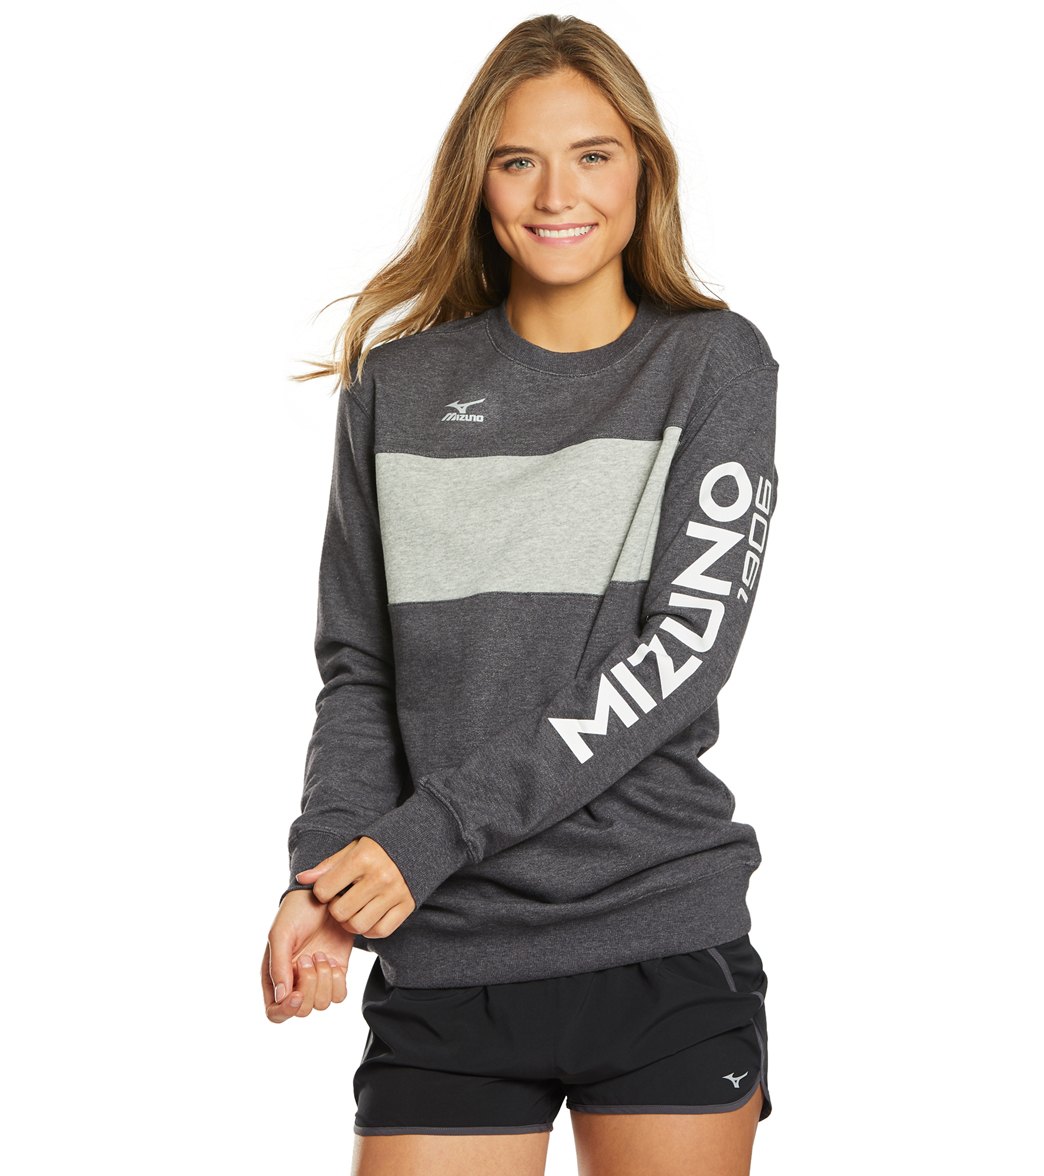 Mizuno Women's Retro Crew Volleyball Sweatshirt - Heathered Charcoal/Grey/Charcoal Large Cotton/Spandex - Swimoutlet.com